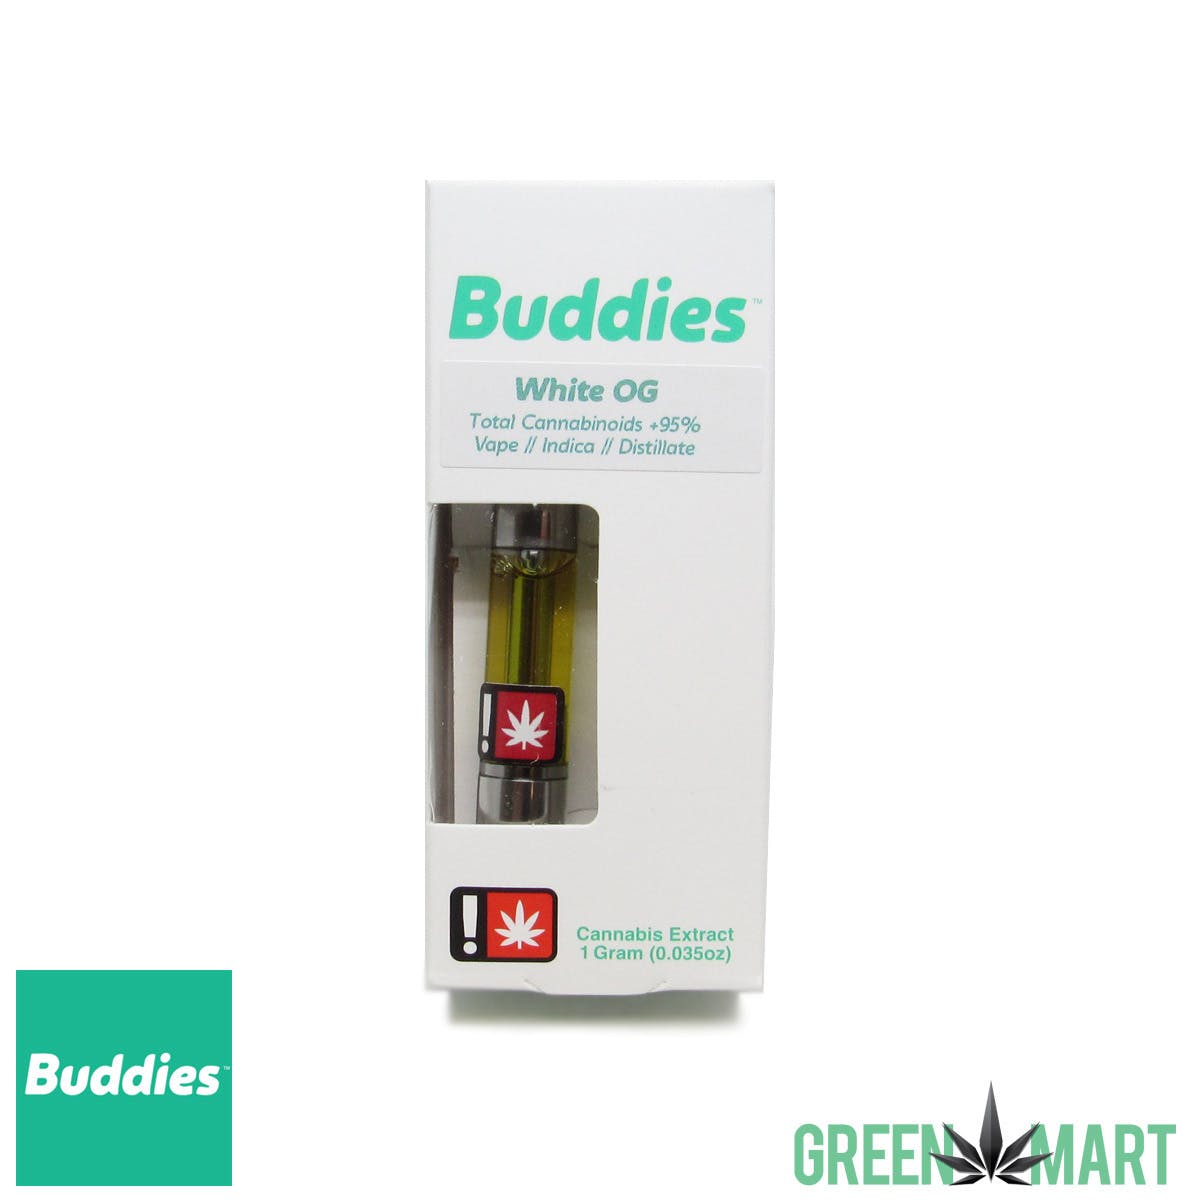 Buddies Brand Distillate Cartridge - White OG